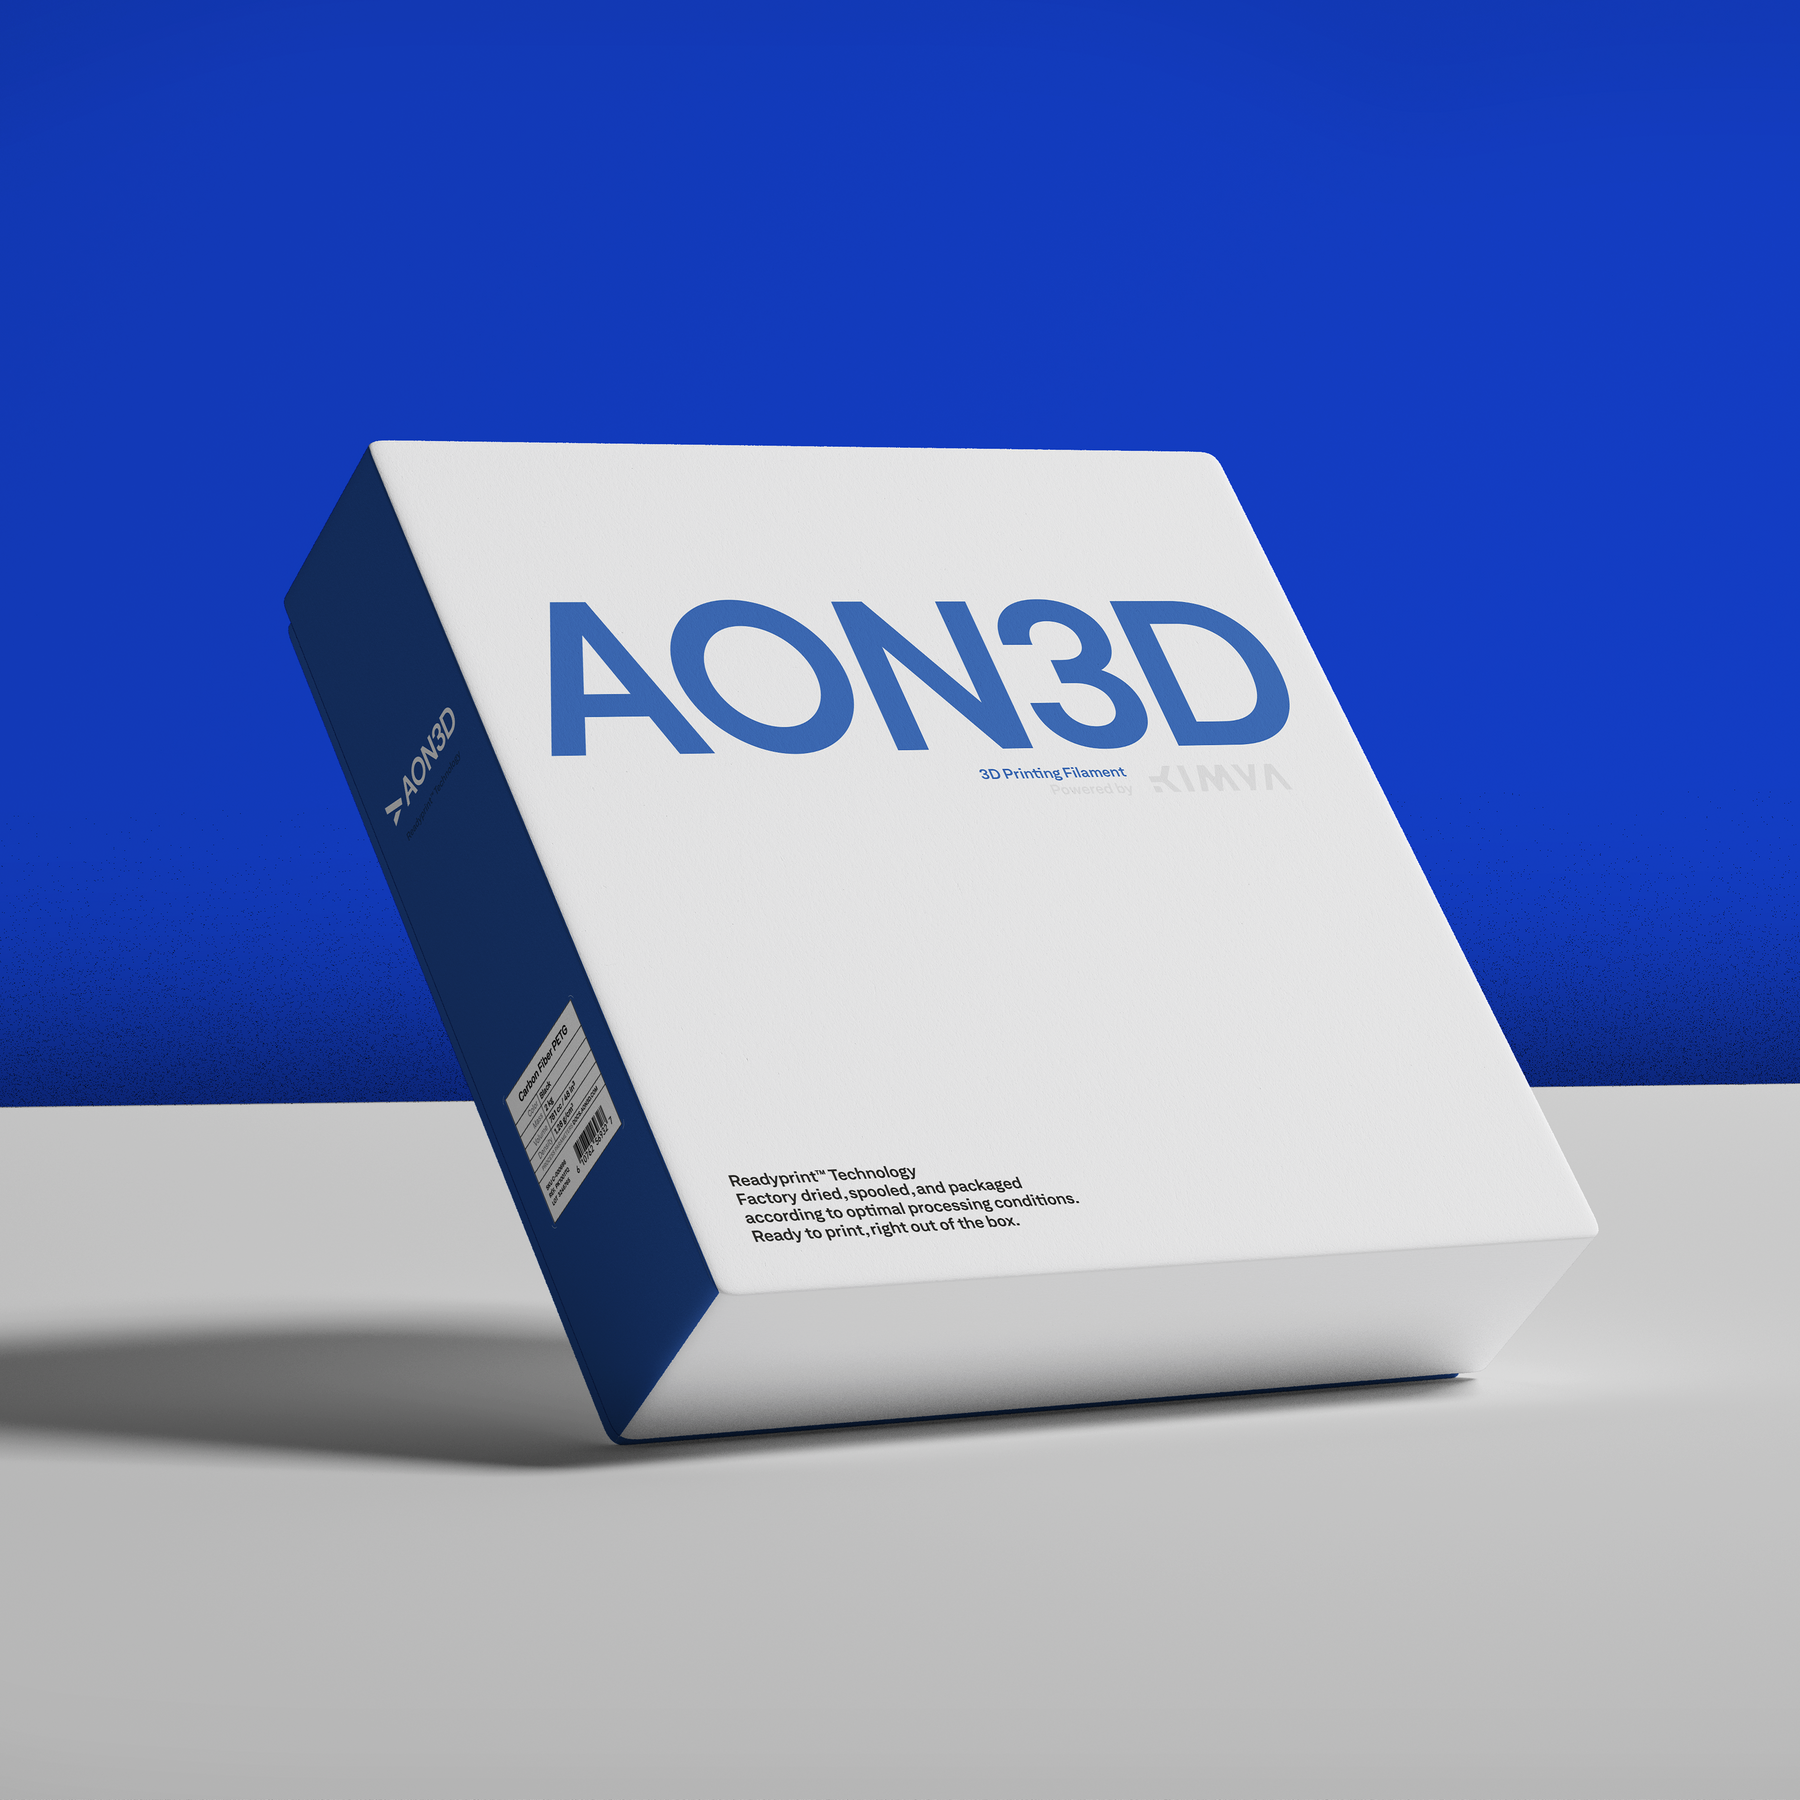 AON3D ReadyPrint™ Material Bundle Contains 26 spools, 46 kg total